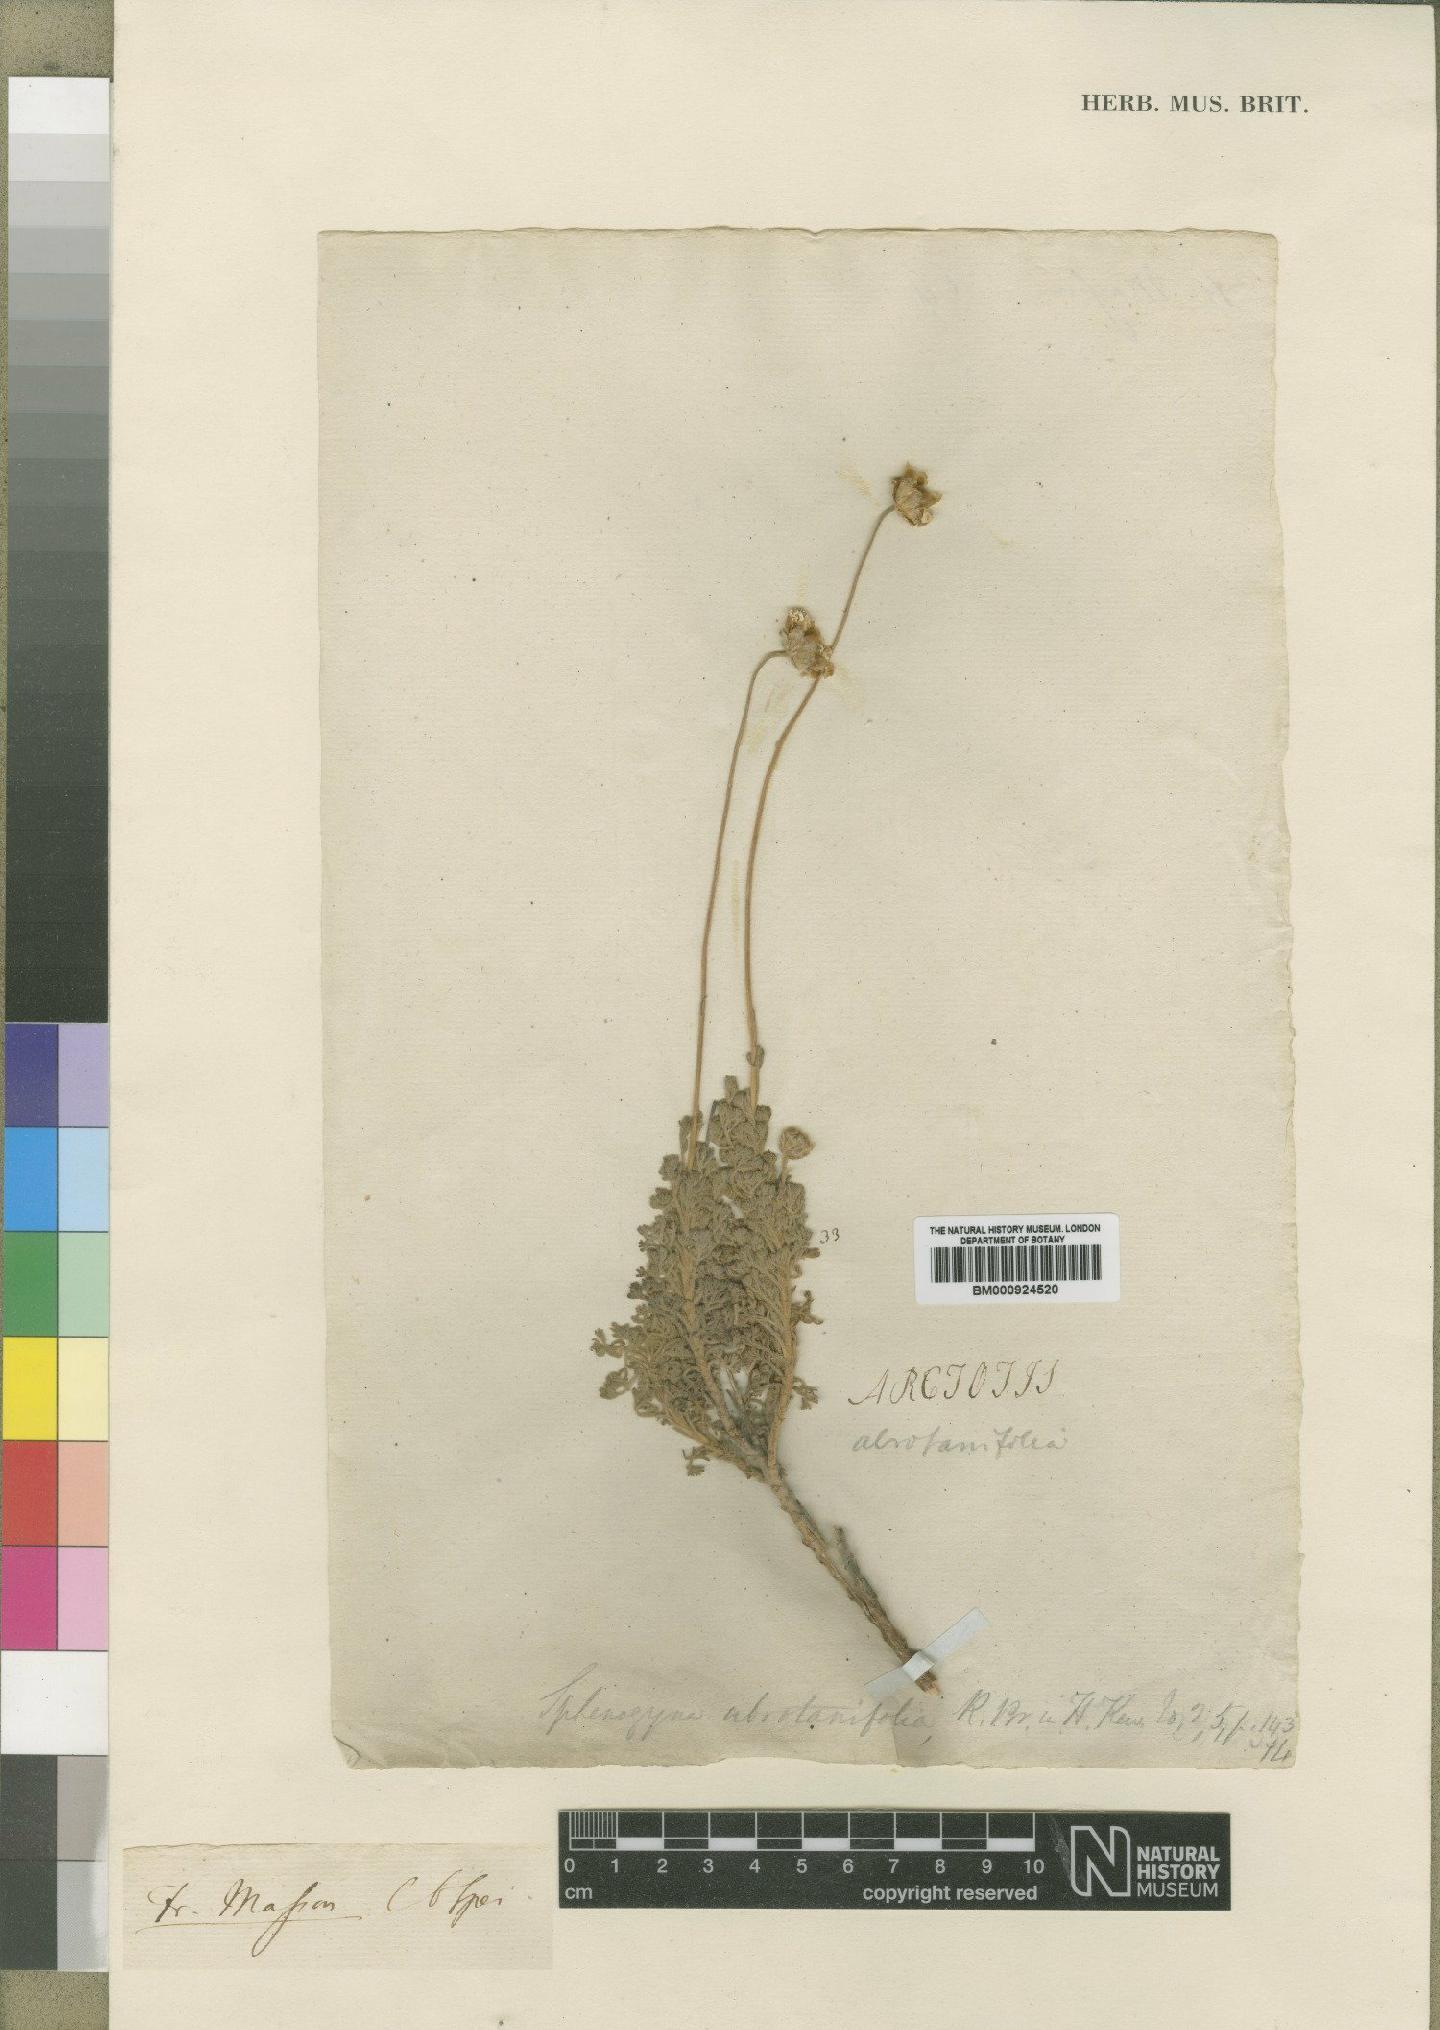 To NHMUK collection (Ursinia abrotanifolia Spreng.; Type; NHMUK:ecatalogue:4529534)